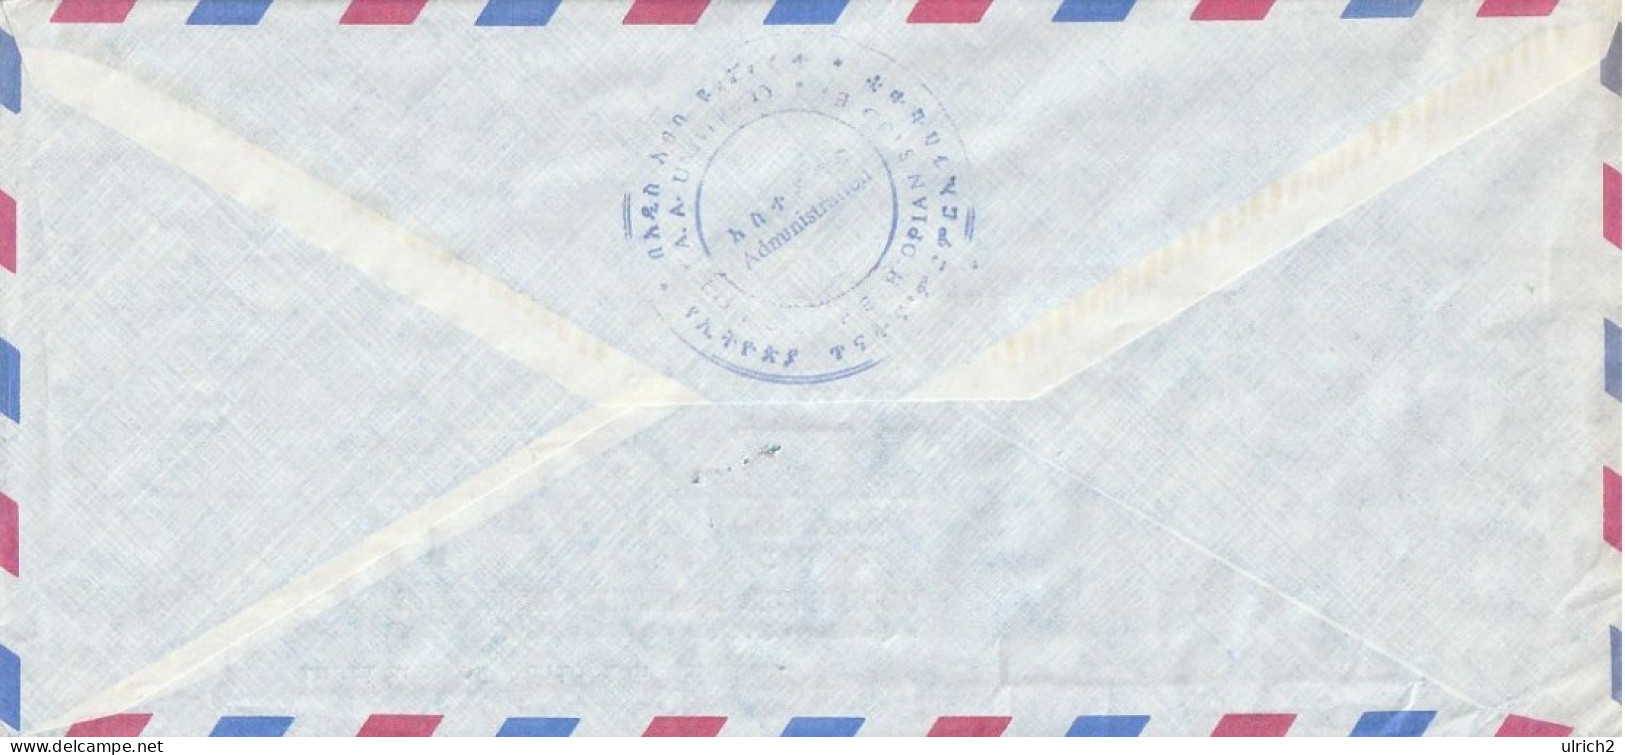 Äthiopien Ethiopia - Airmail Letter - Addis Ababa University Provisional Military Government - To Germany - 1977 (67143) - Etiopia